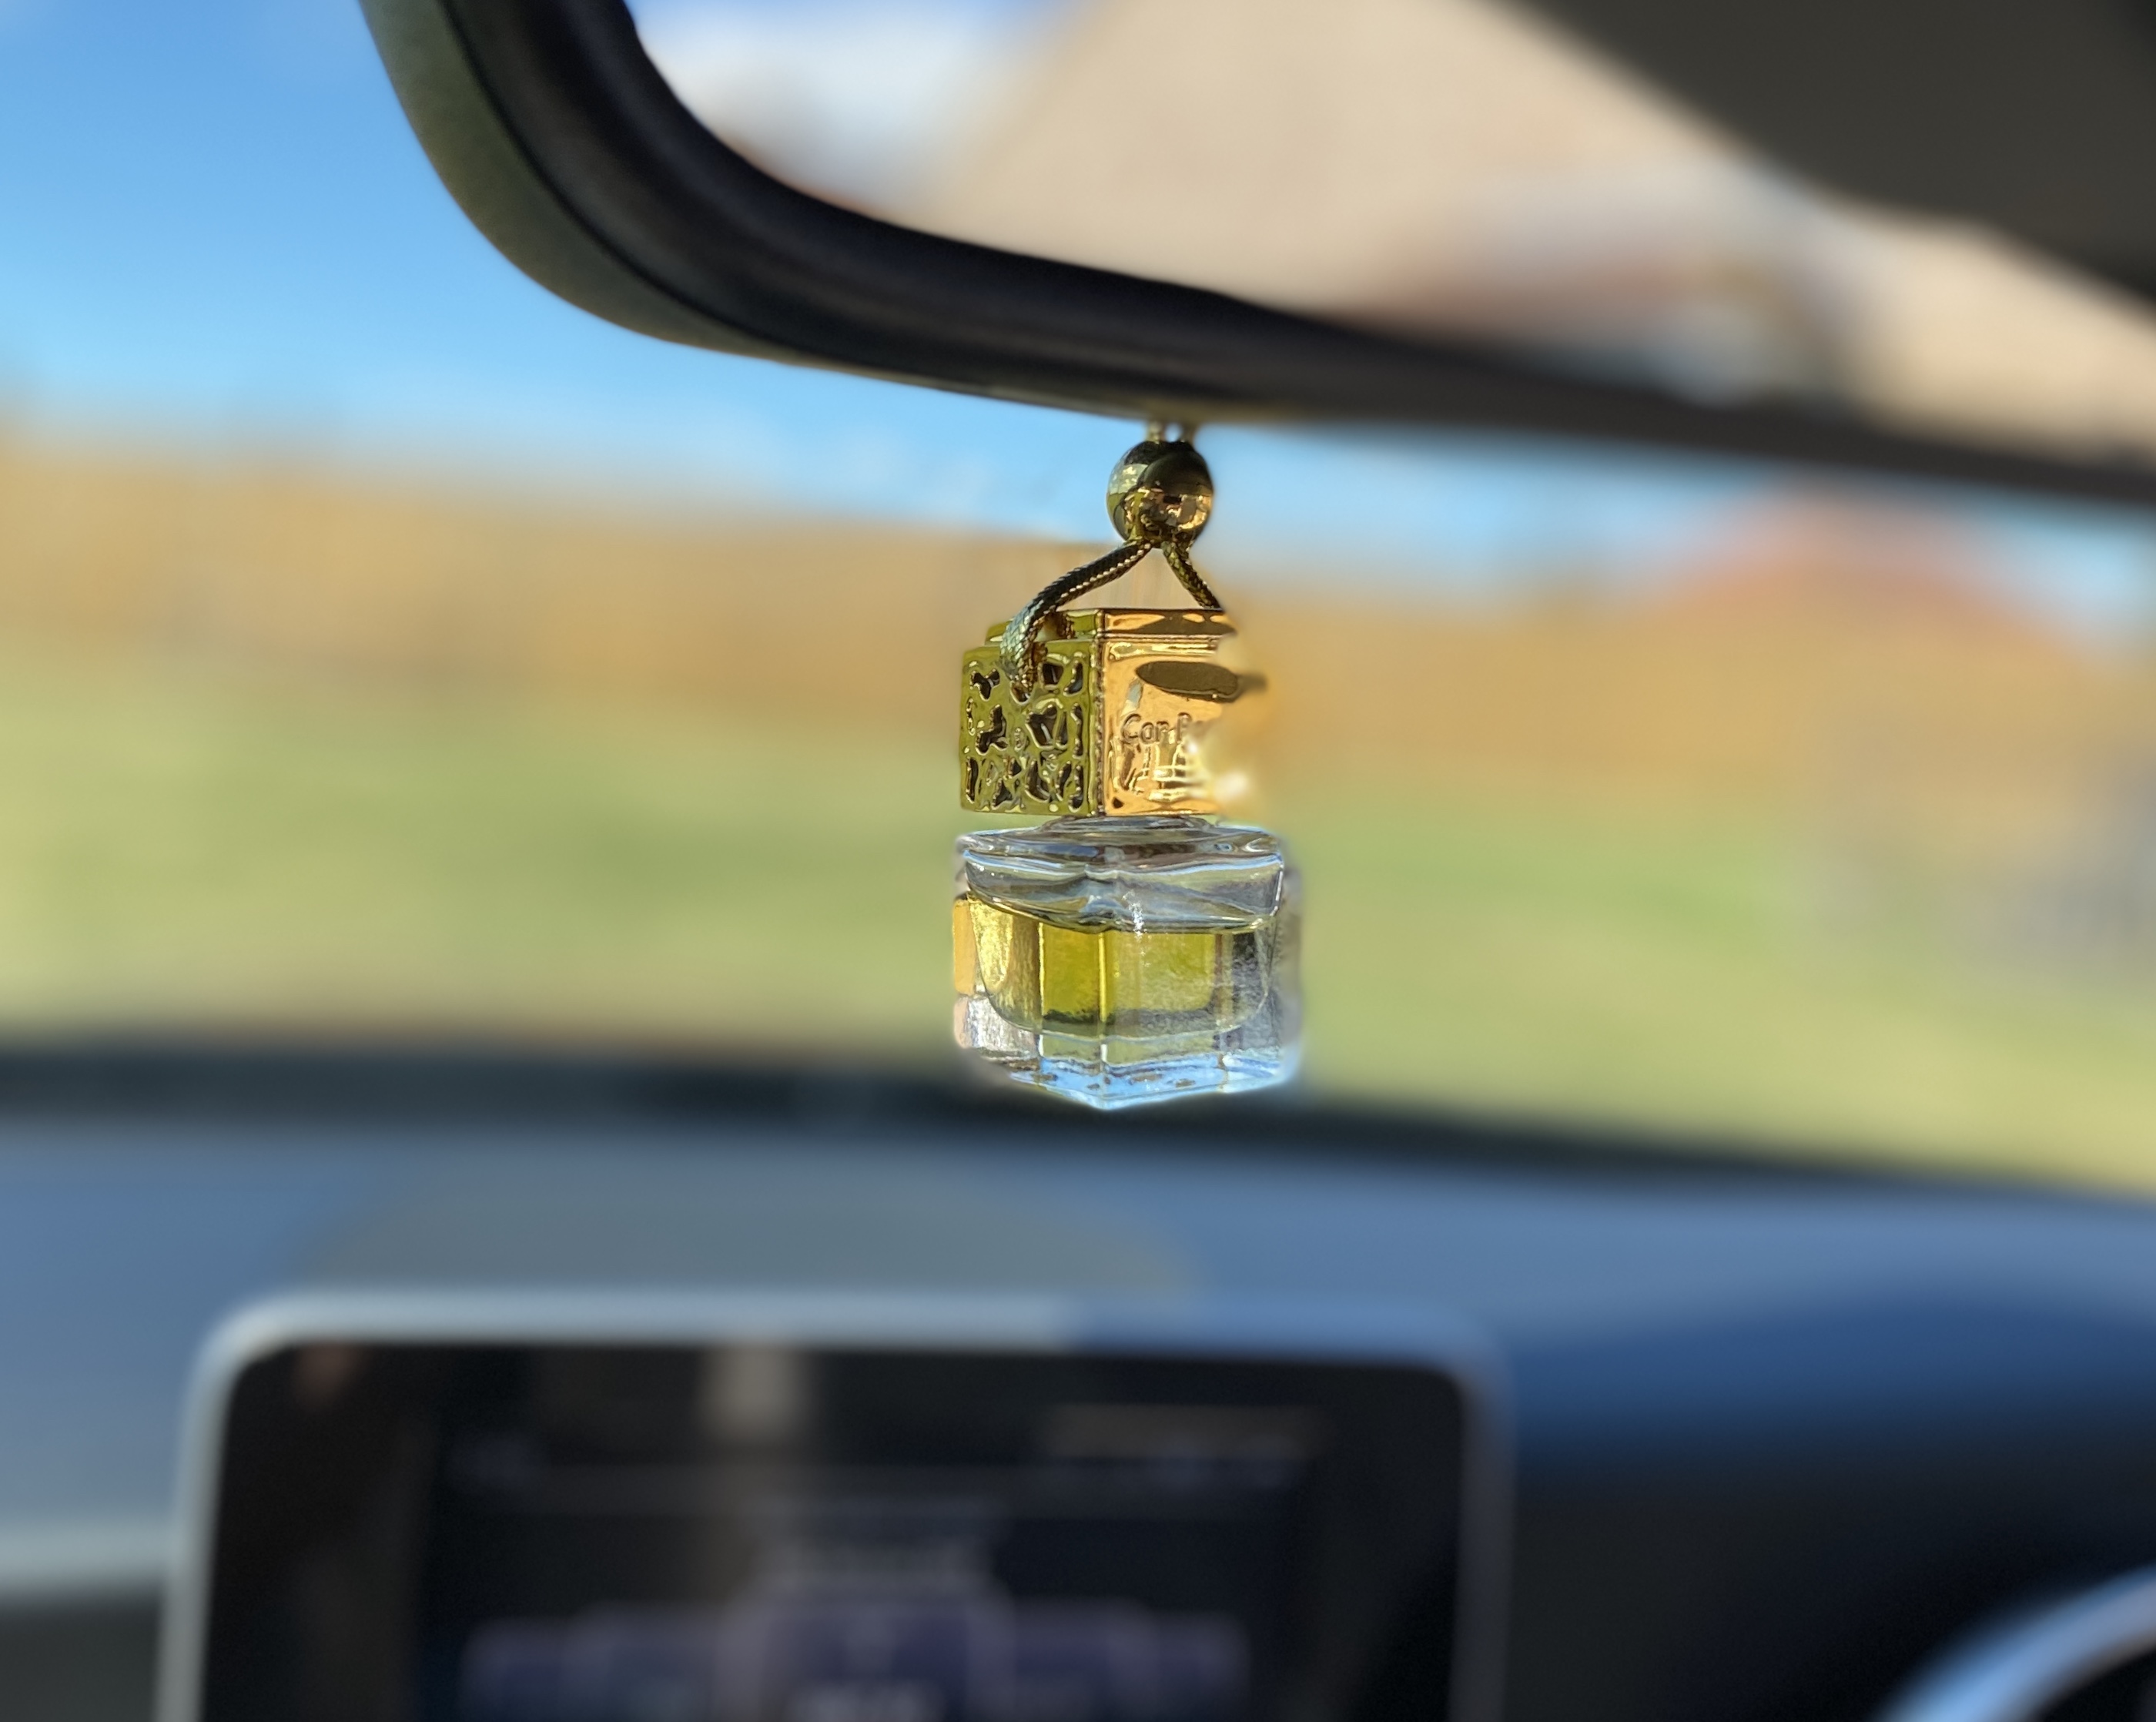 Oudh Gold car fragrance